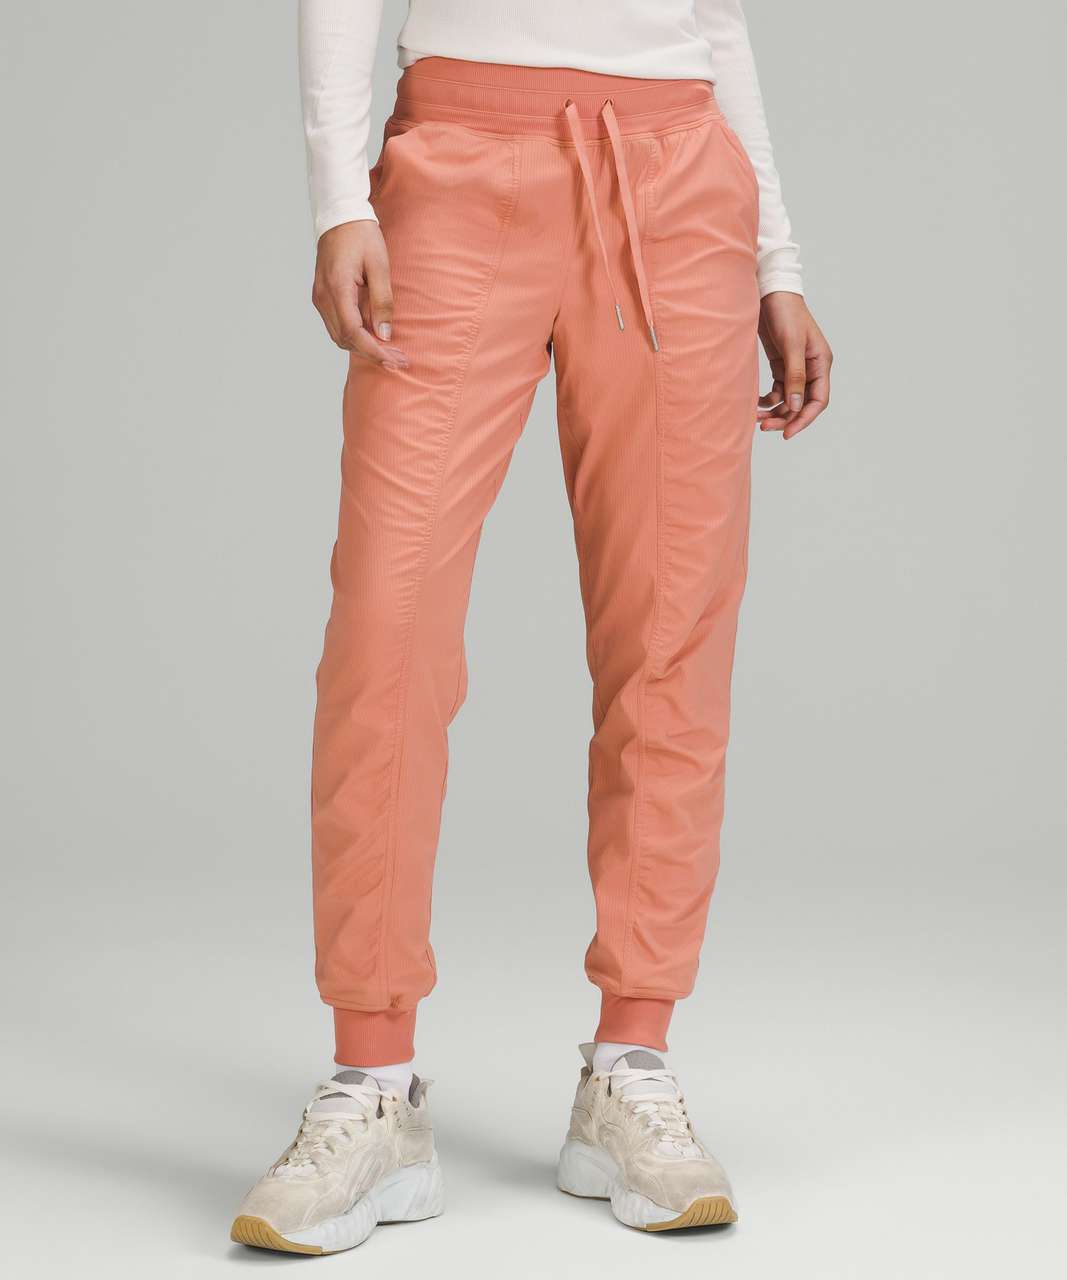 Cabazon Outlet deal today , align leggings $34 ( pink savannah, soleil &  pink blossom multi ) & scuba jogger $39 : r/lululemon